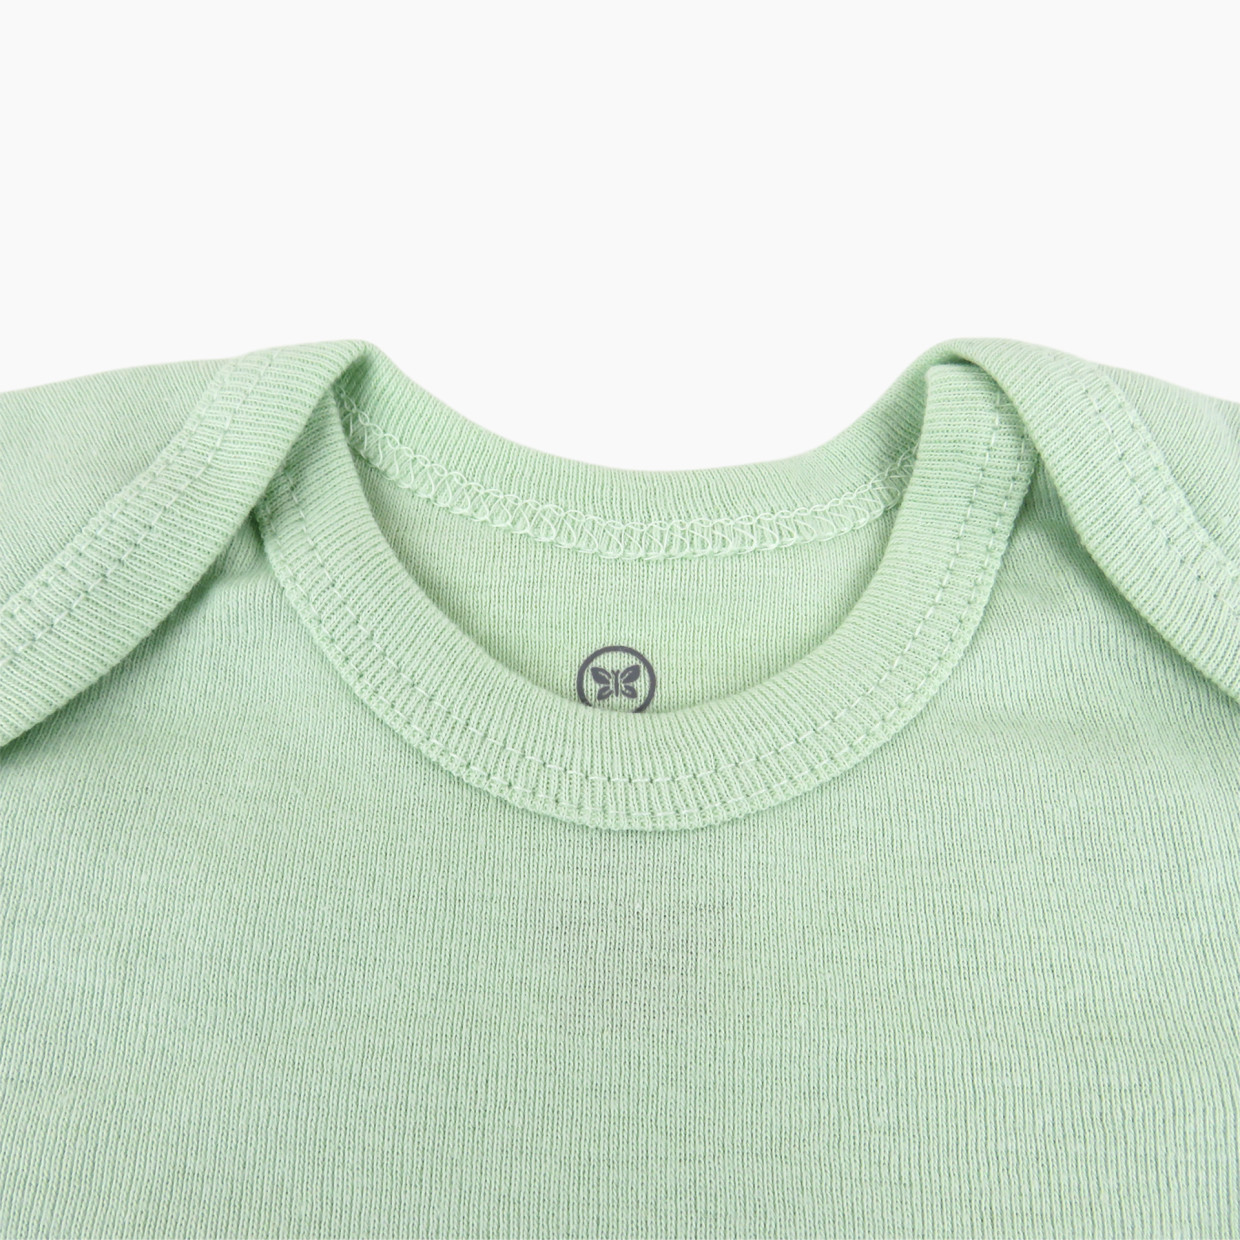 Honest Baby Clothing 5-Pack Organic Cotton Short Sleeve Bodysuit - Tutu Cute, 3-6 M, 5.